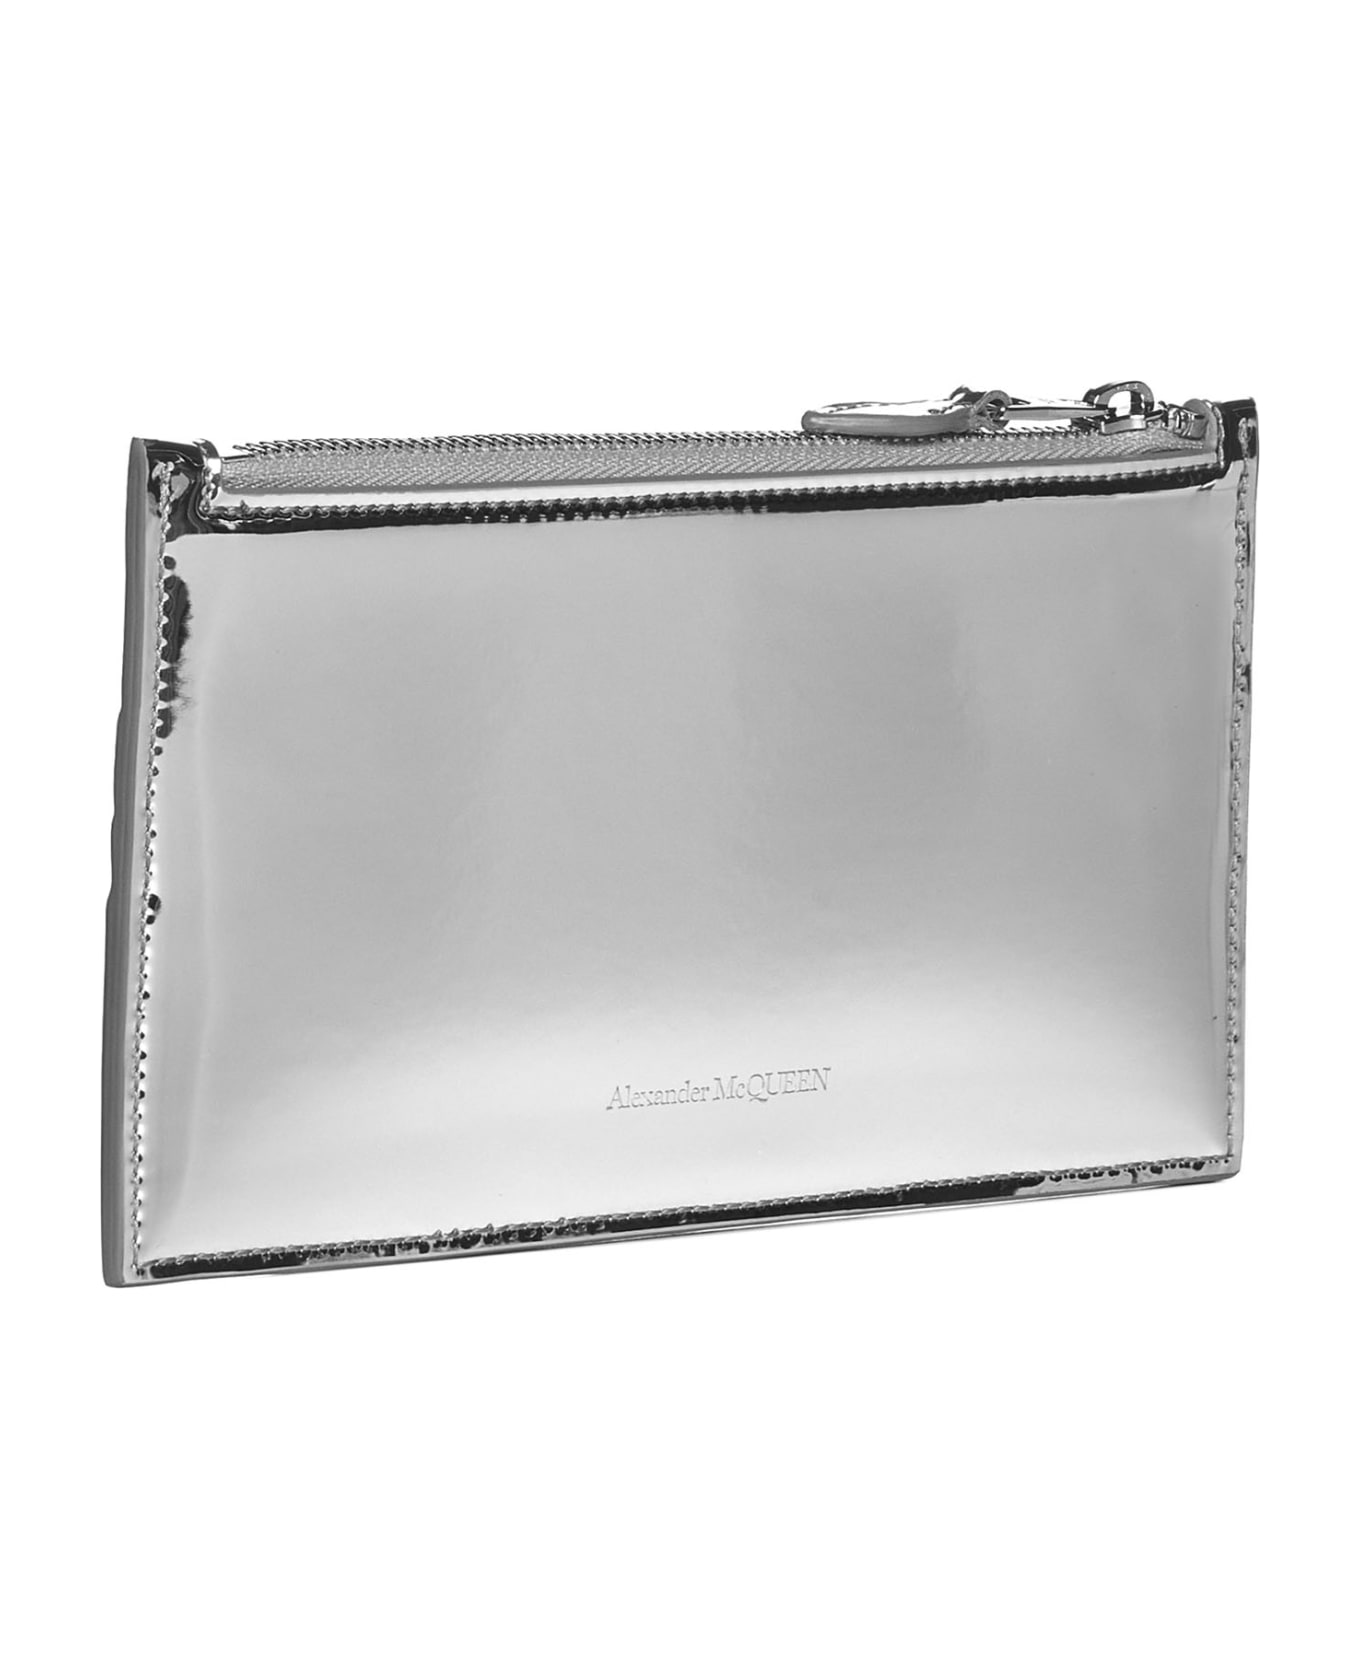 Alexander McQueen Wallet - Silver